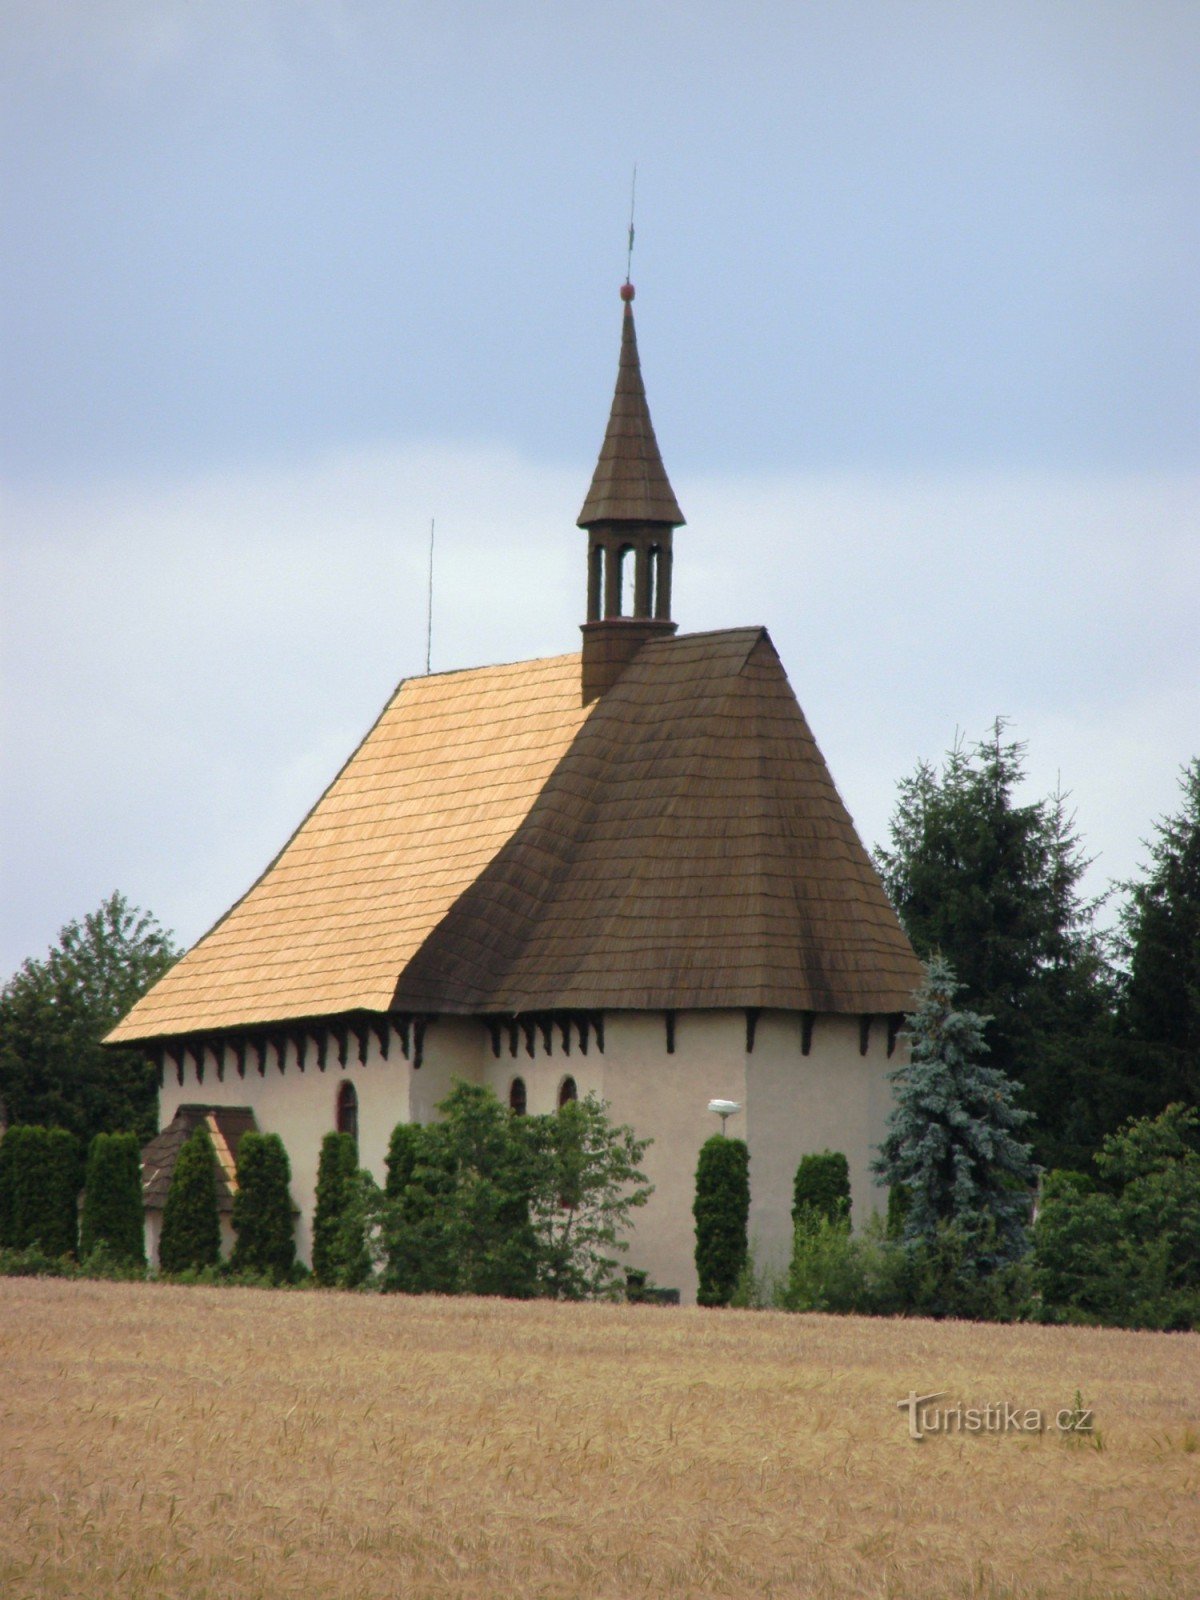 Nhà thờ Kozojedy của St. Wenceslas